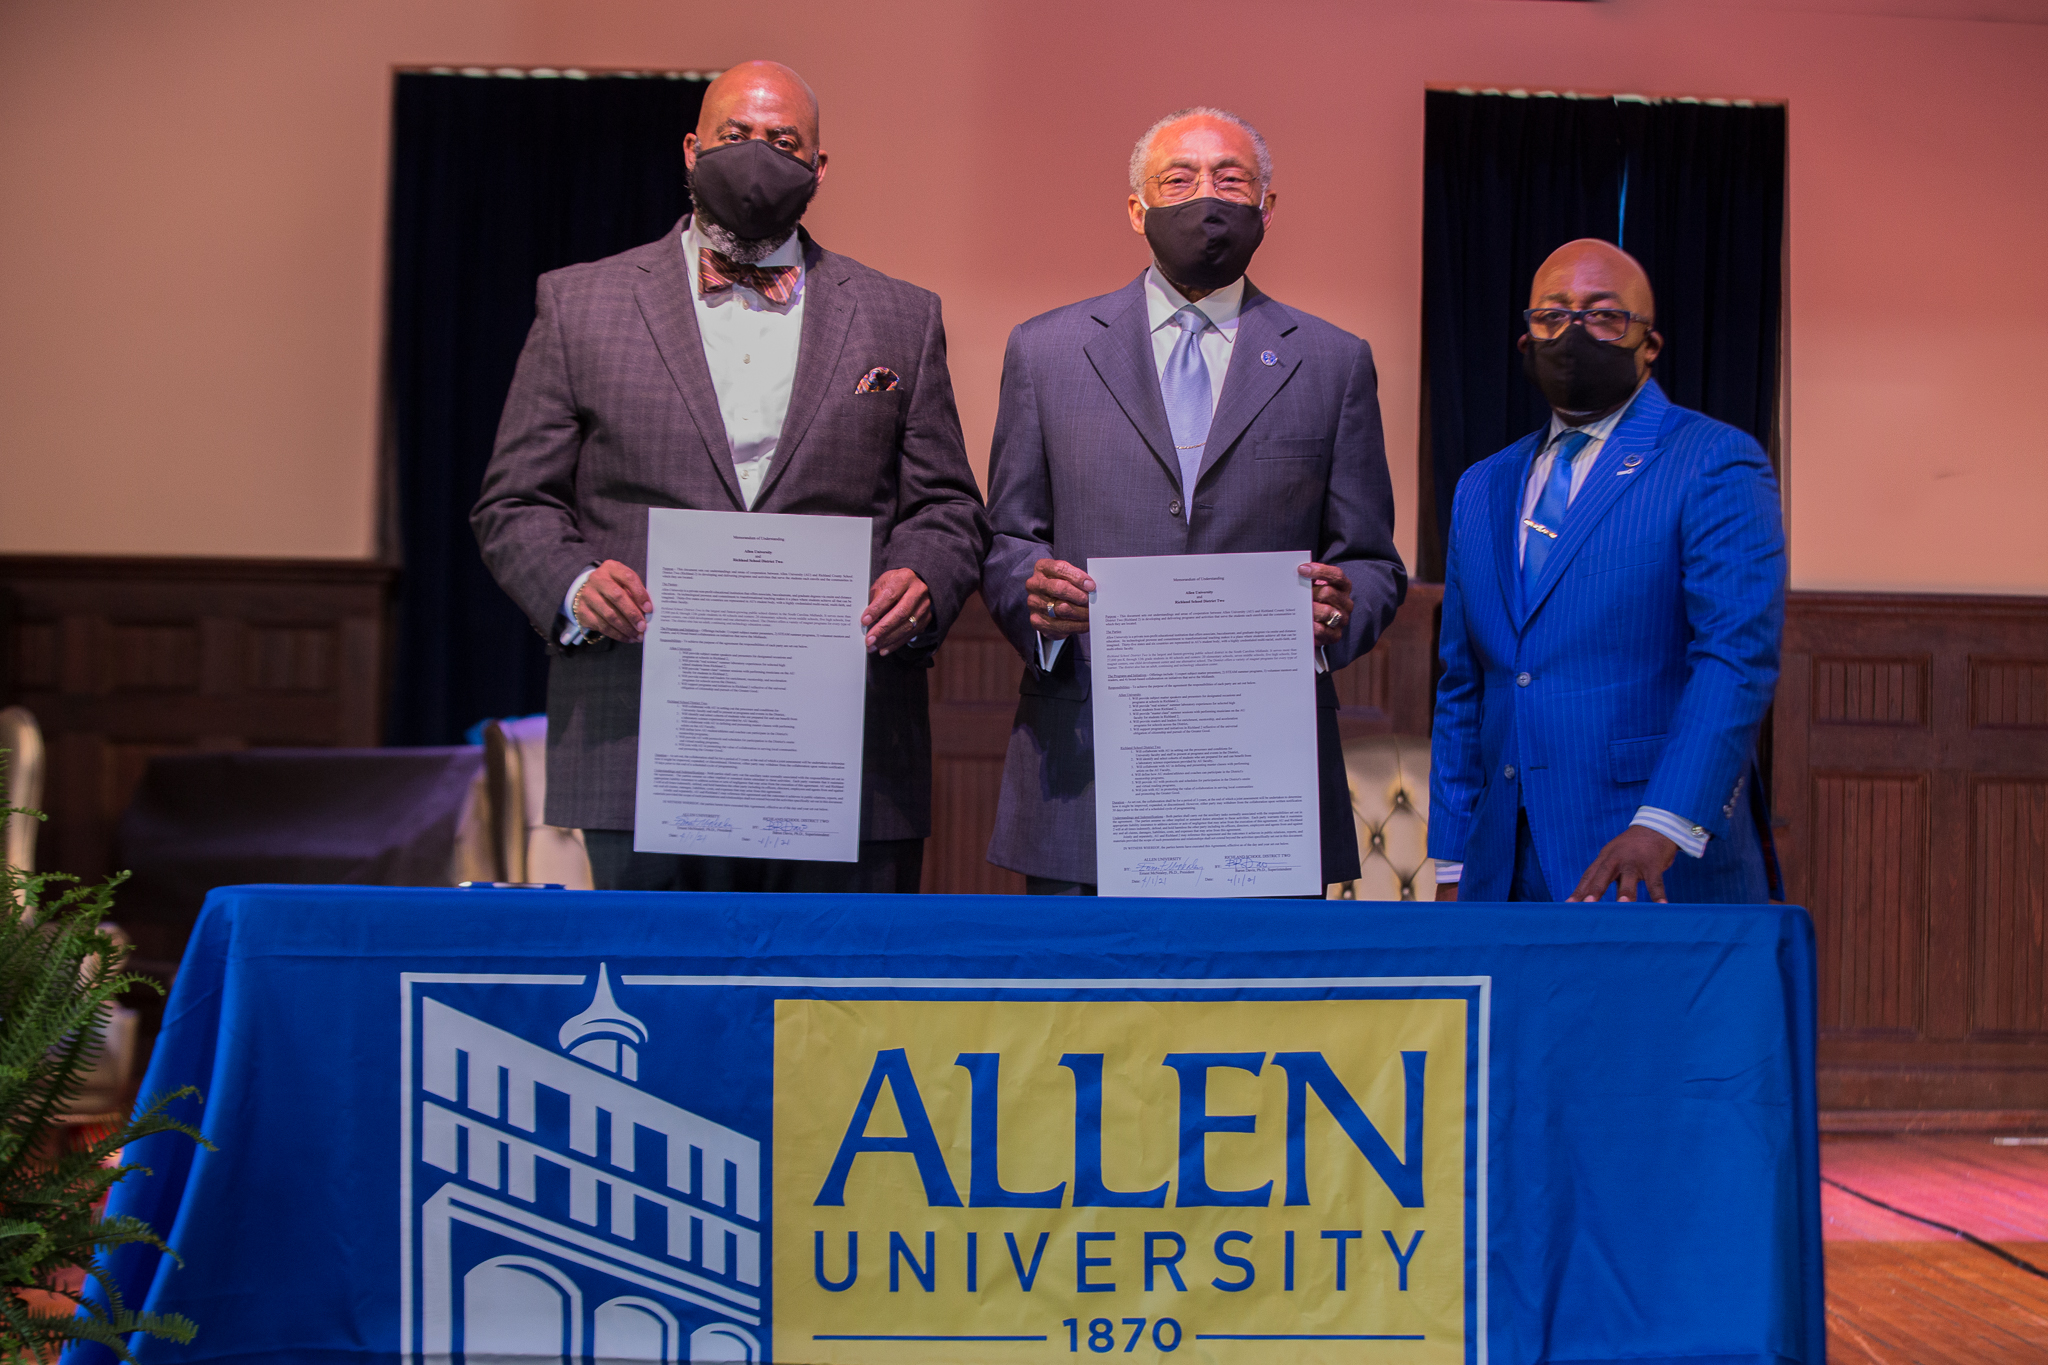 Allen University, Wednesday, April 7, 2021, Press release picture